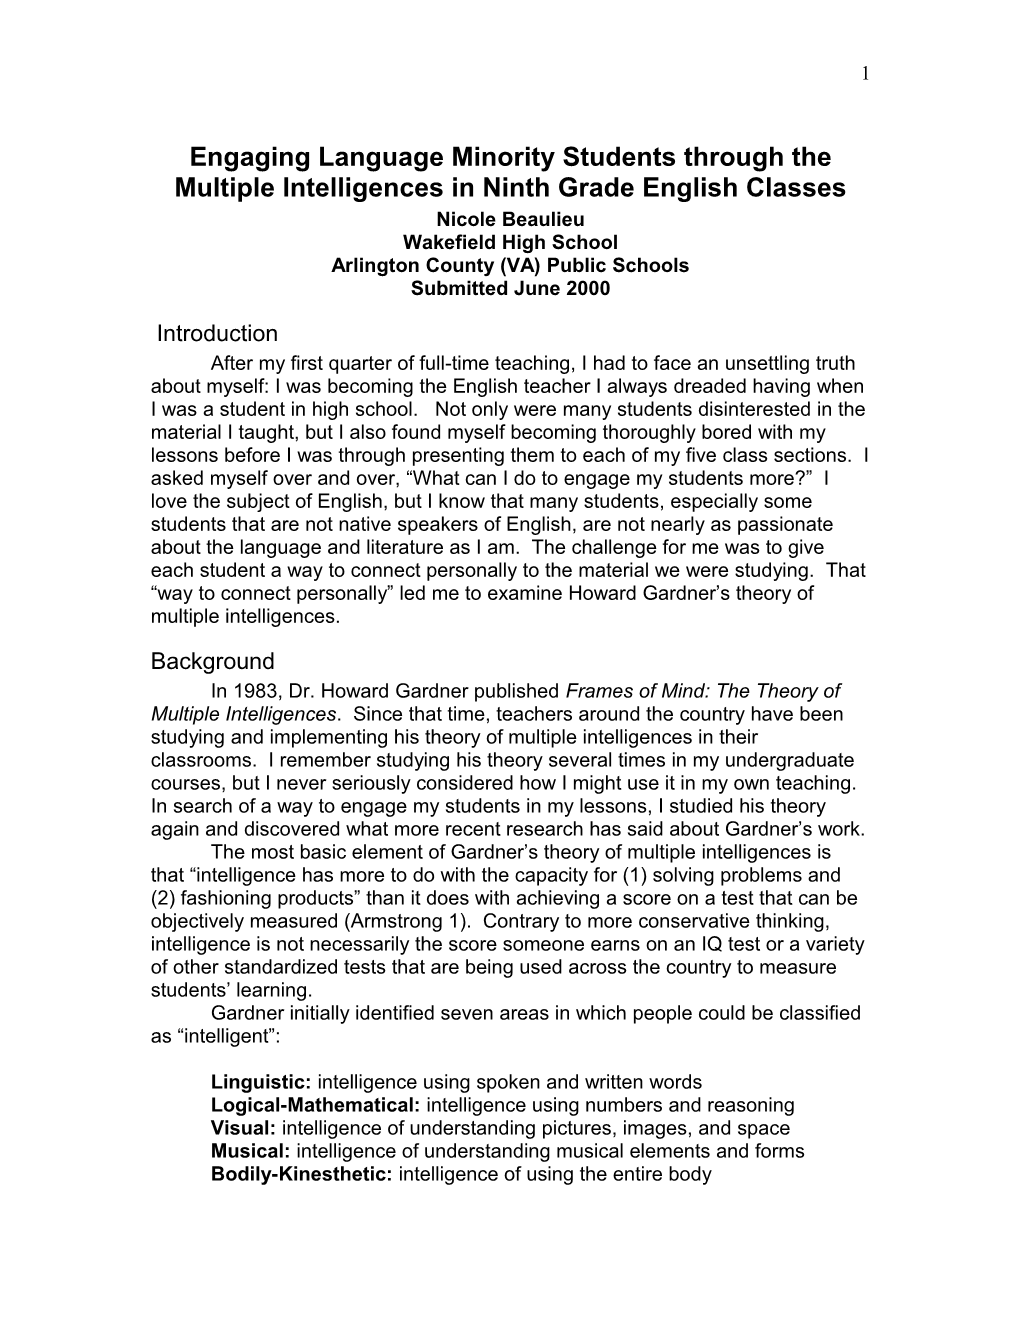 Engaging Language Minority Students Through the Multiple Intelligences in Ninth Grade English